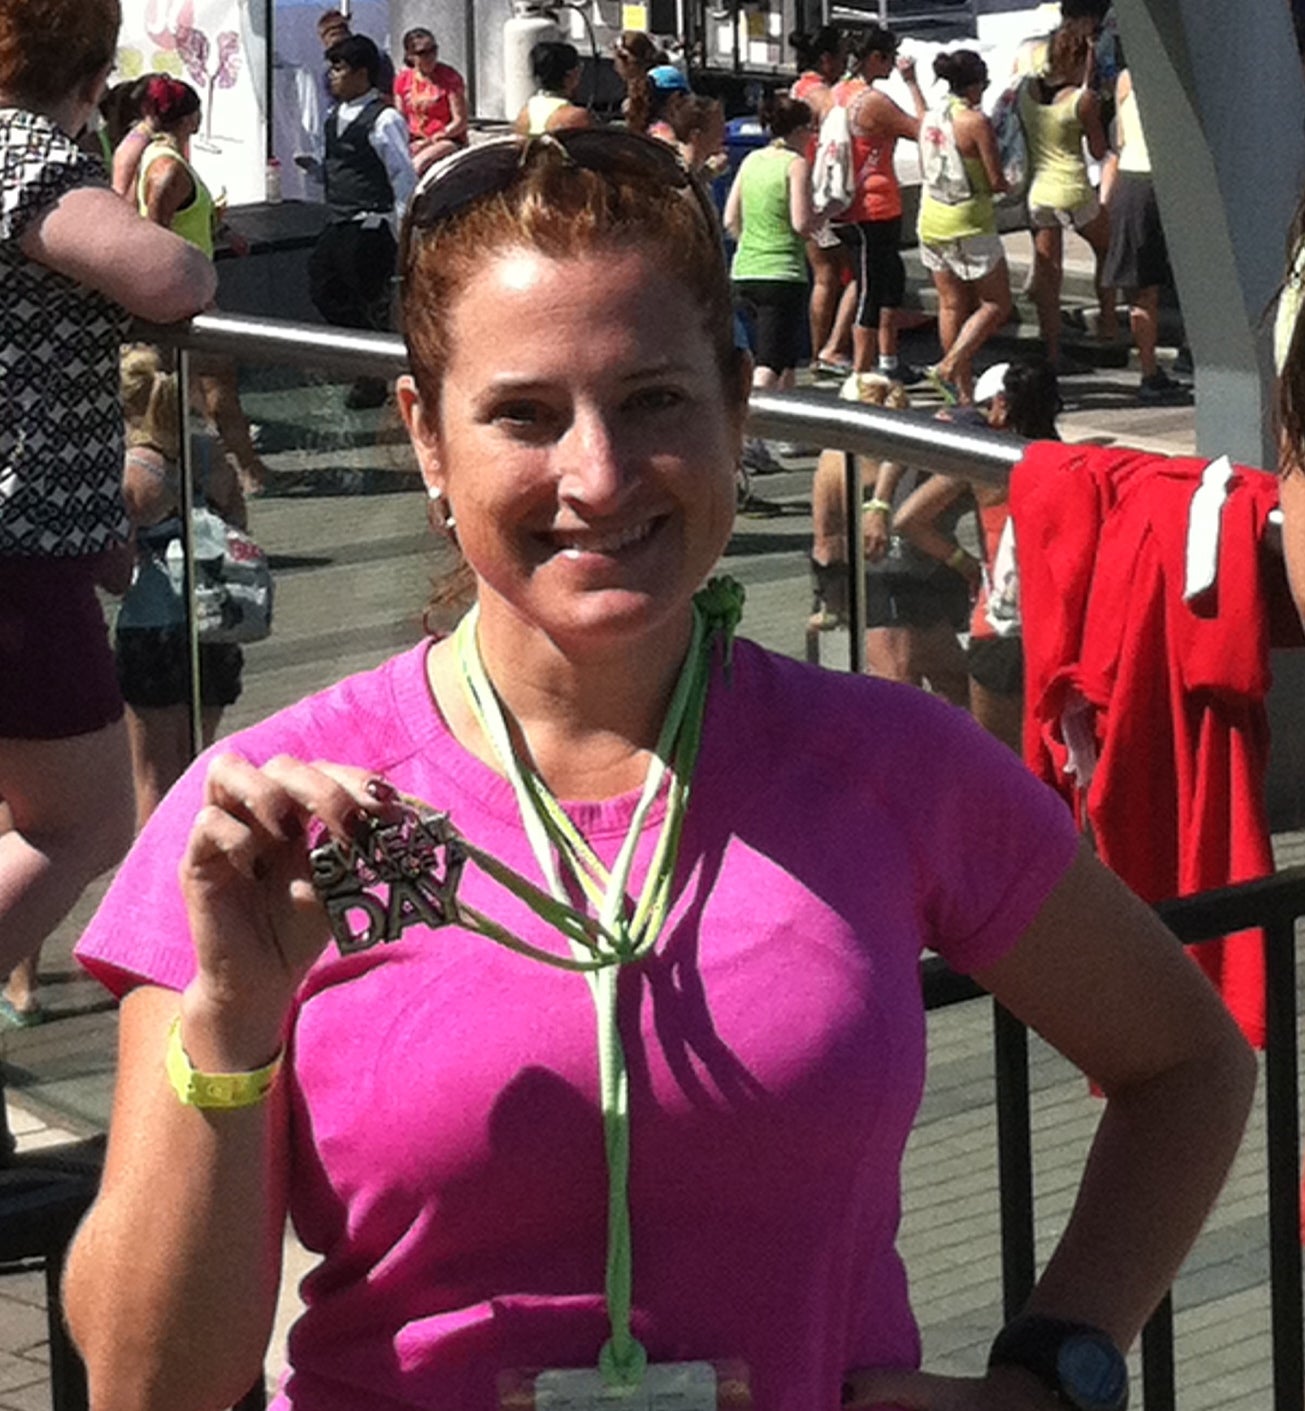 Lululemon Sea Wheeze Half Marathon: Race Recap - The Healthy Slice